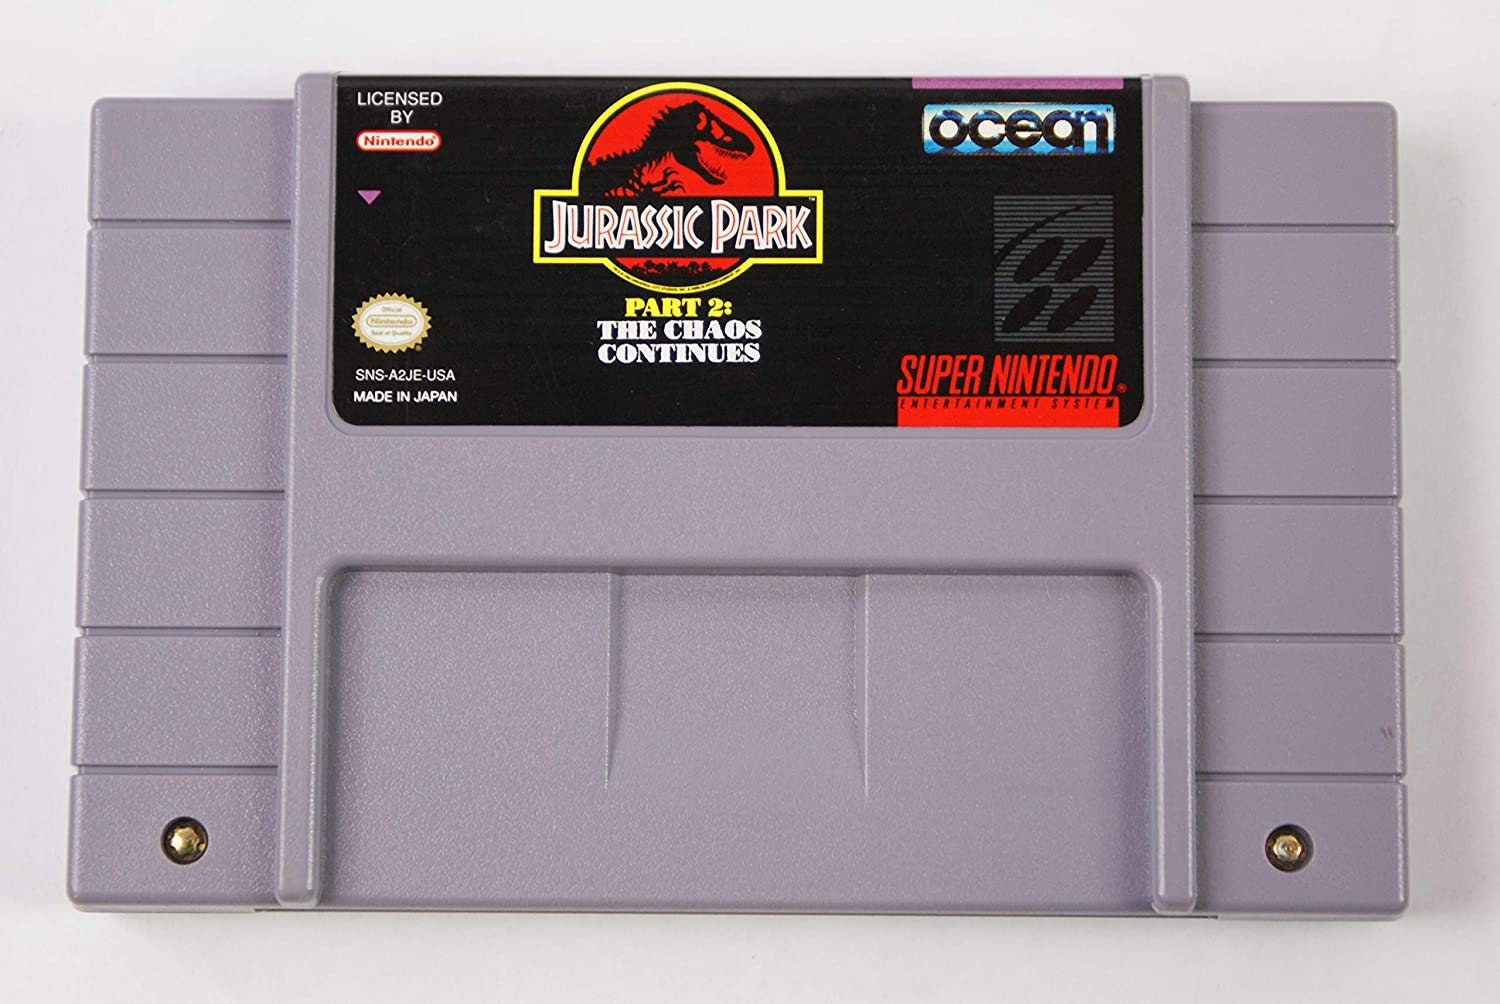 Jurassic Park Classic Games Collection llegará a consolas en 2023 19